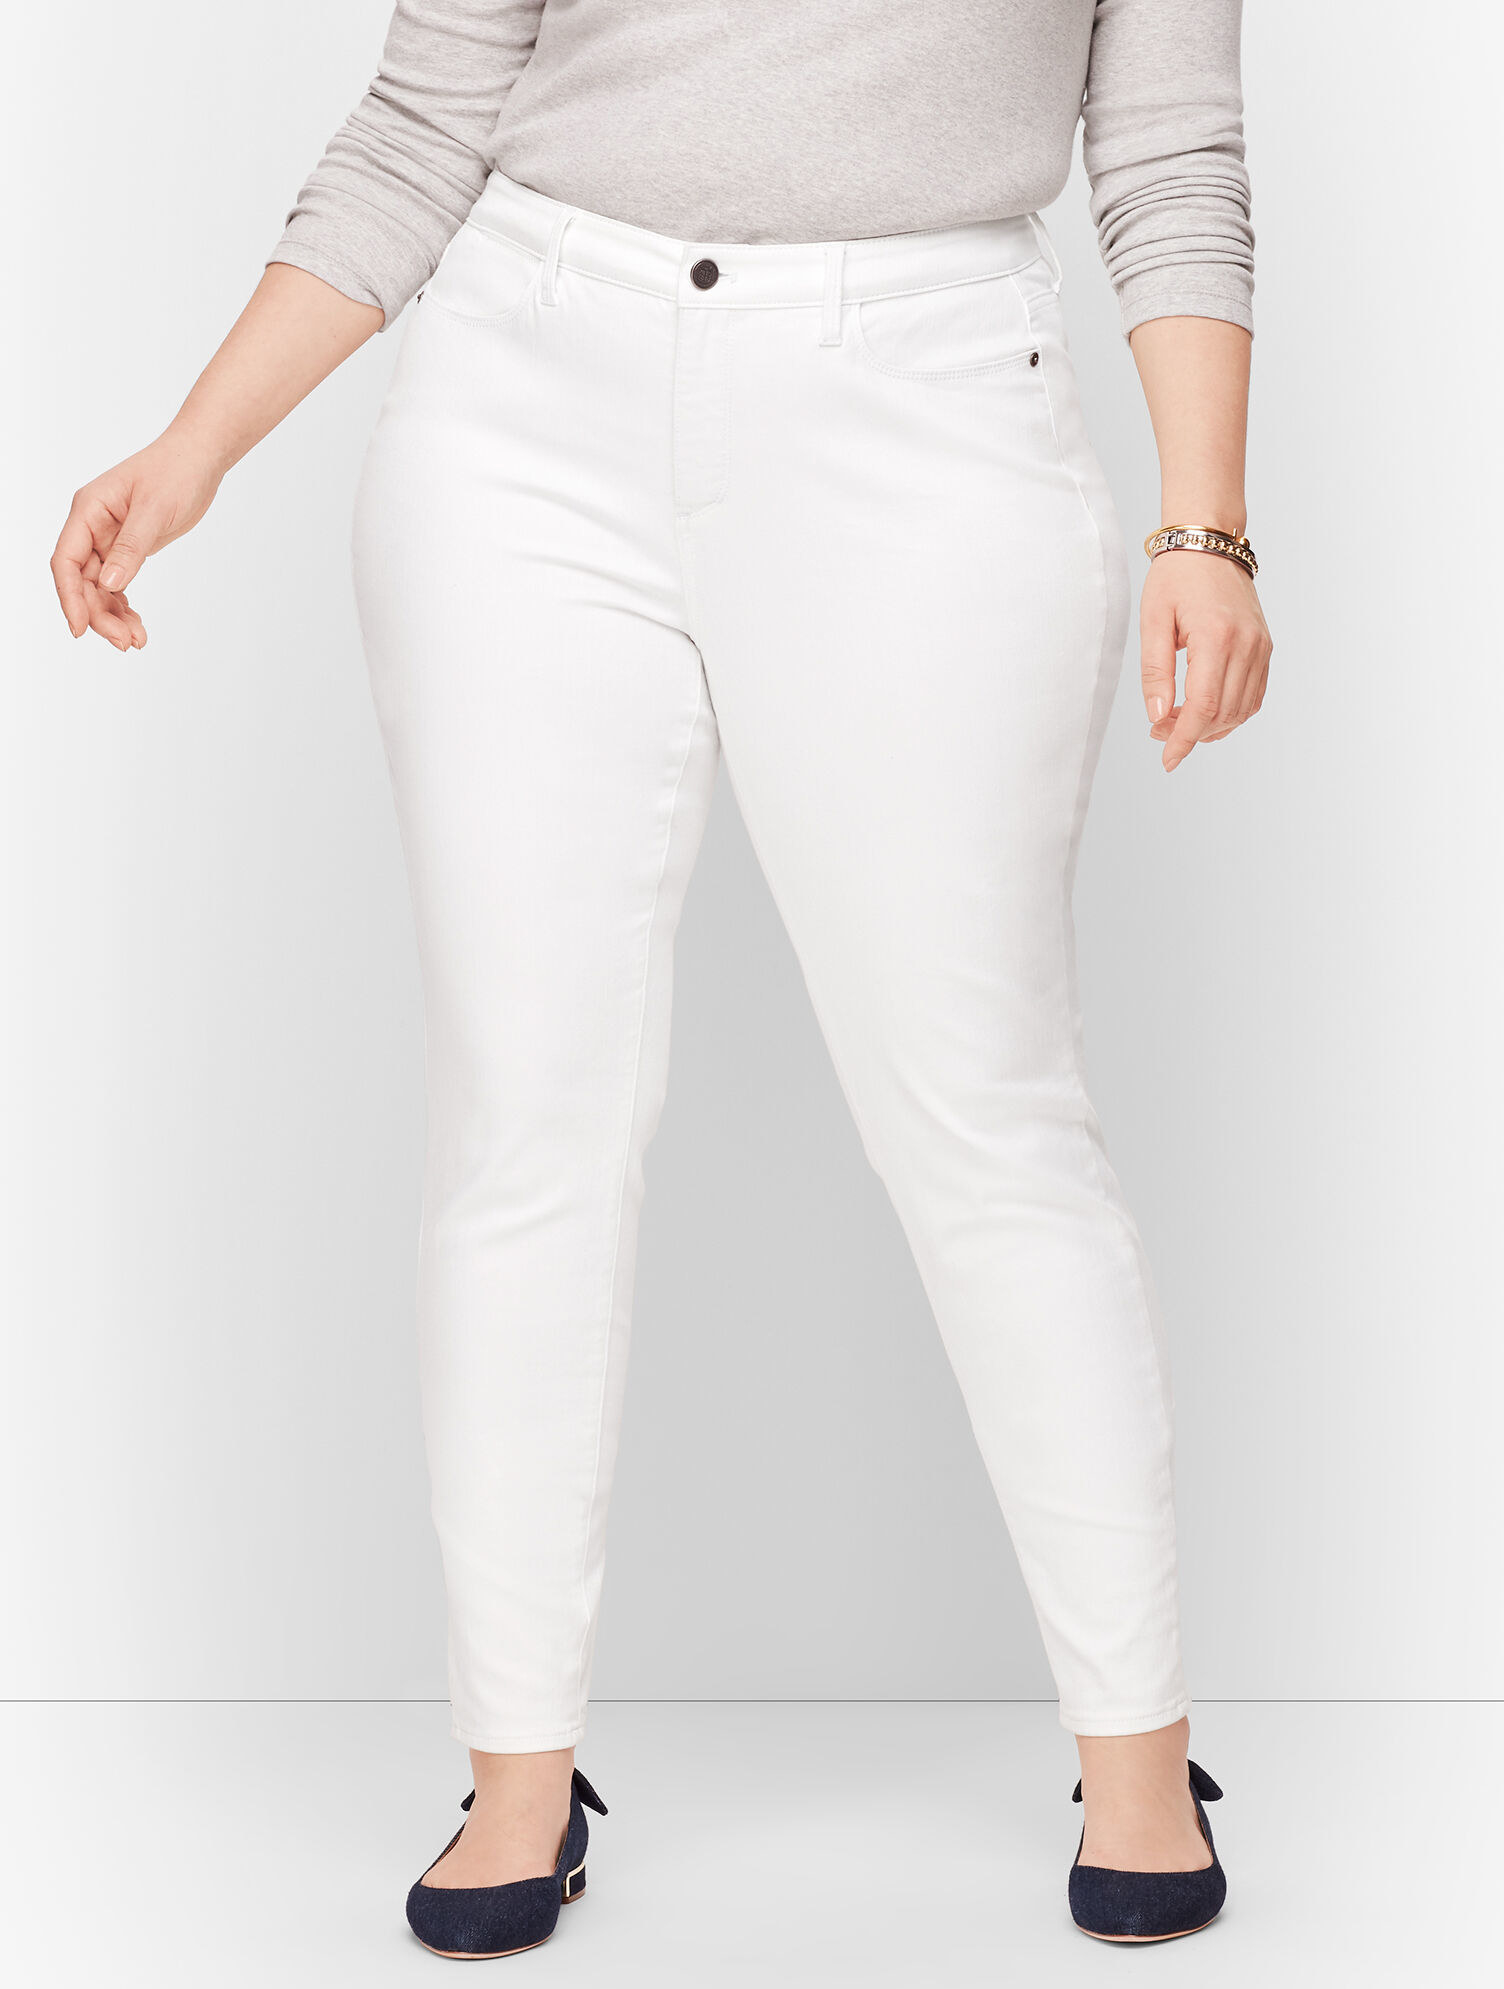 Model wearing white jeggings